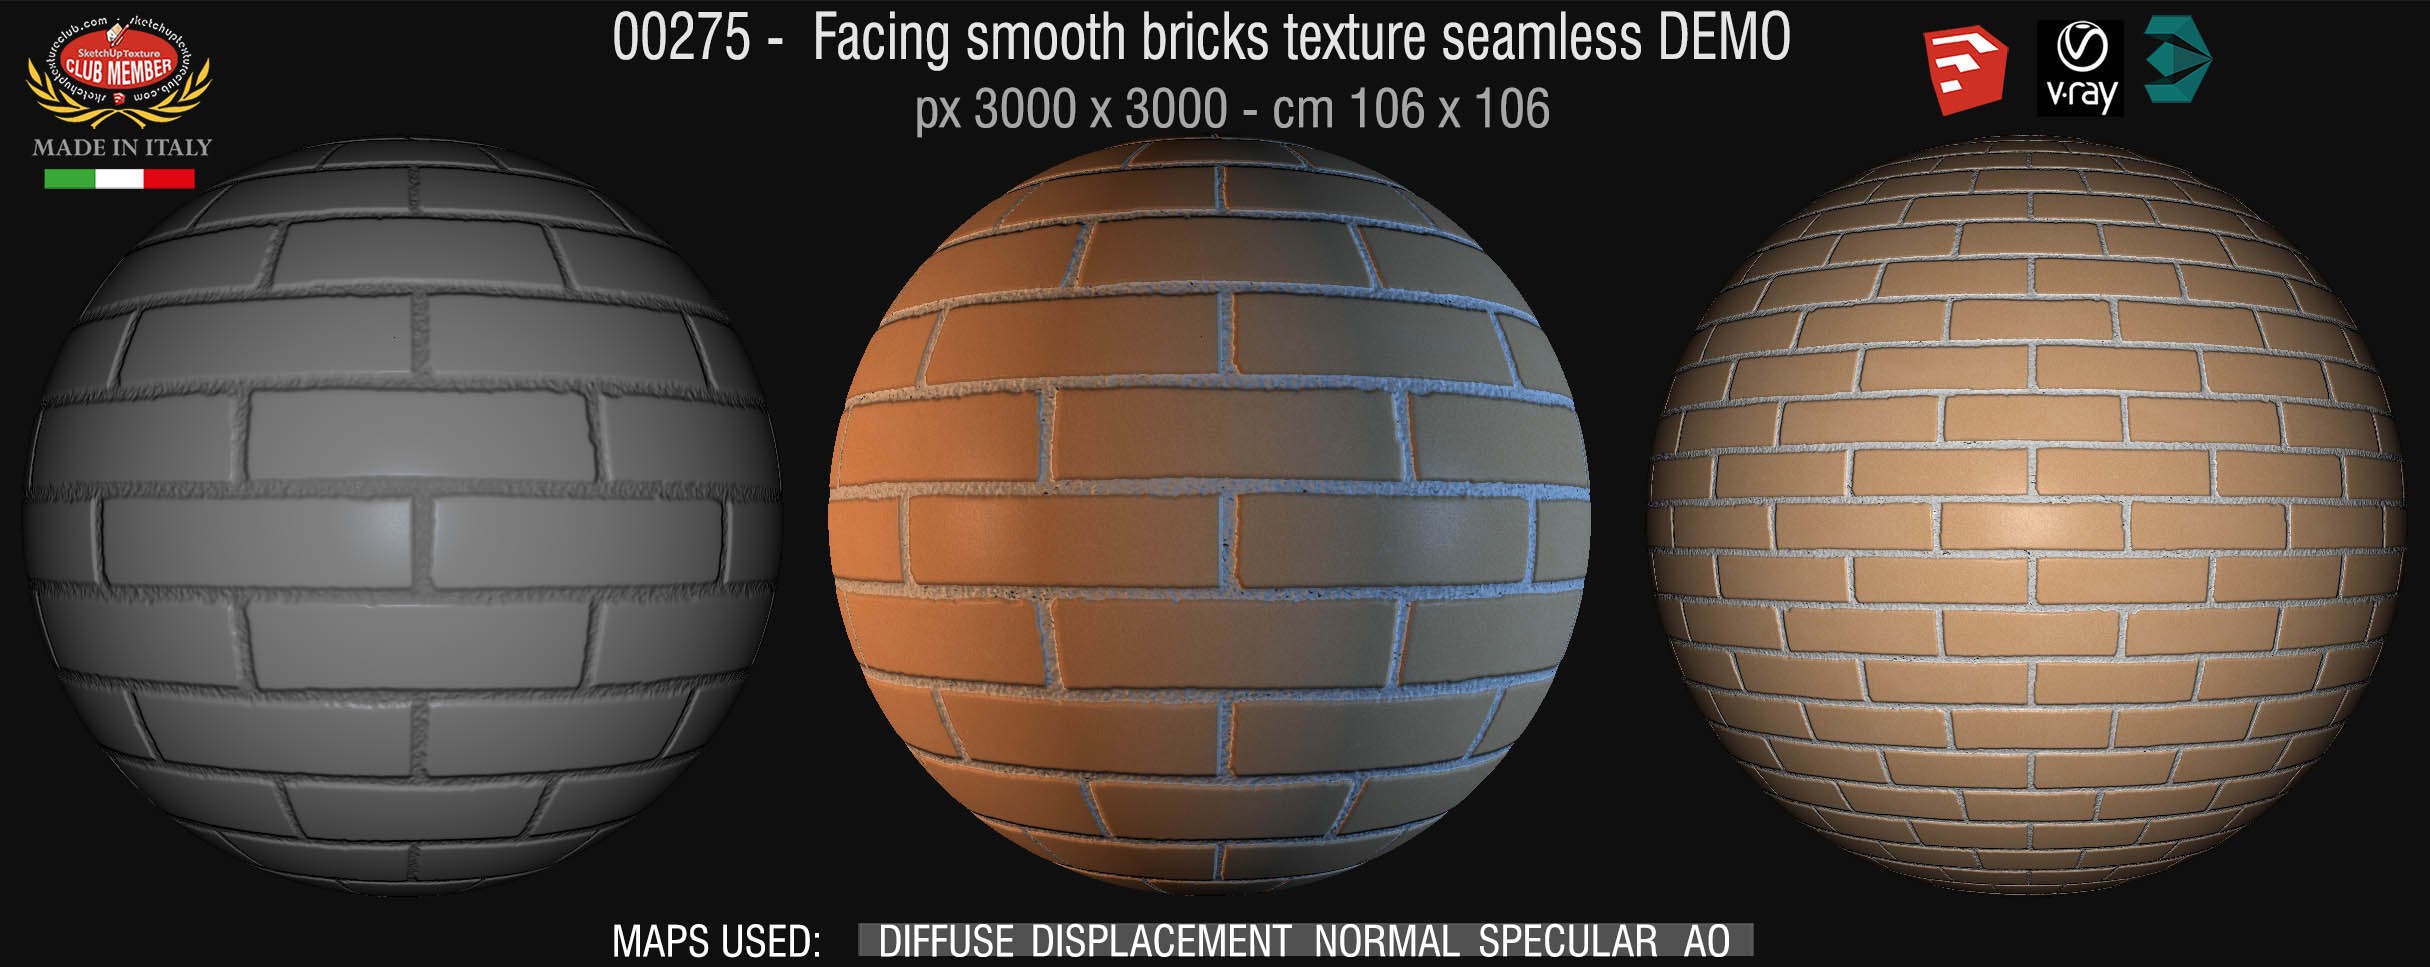 00275 Facing smooth bricks texture seamless + maps DEMO